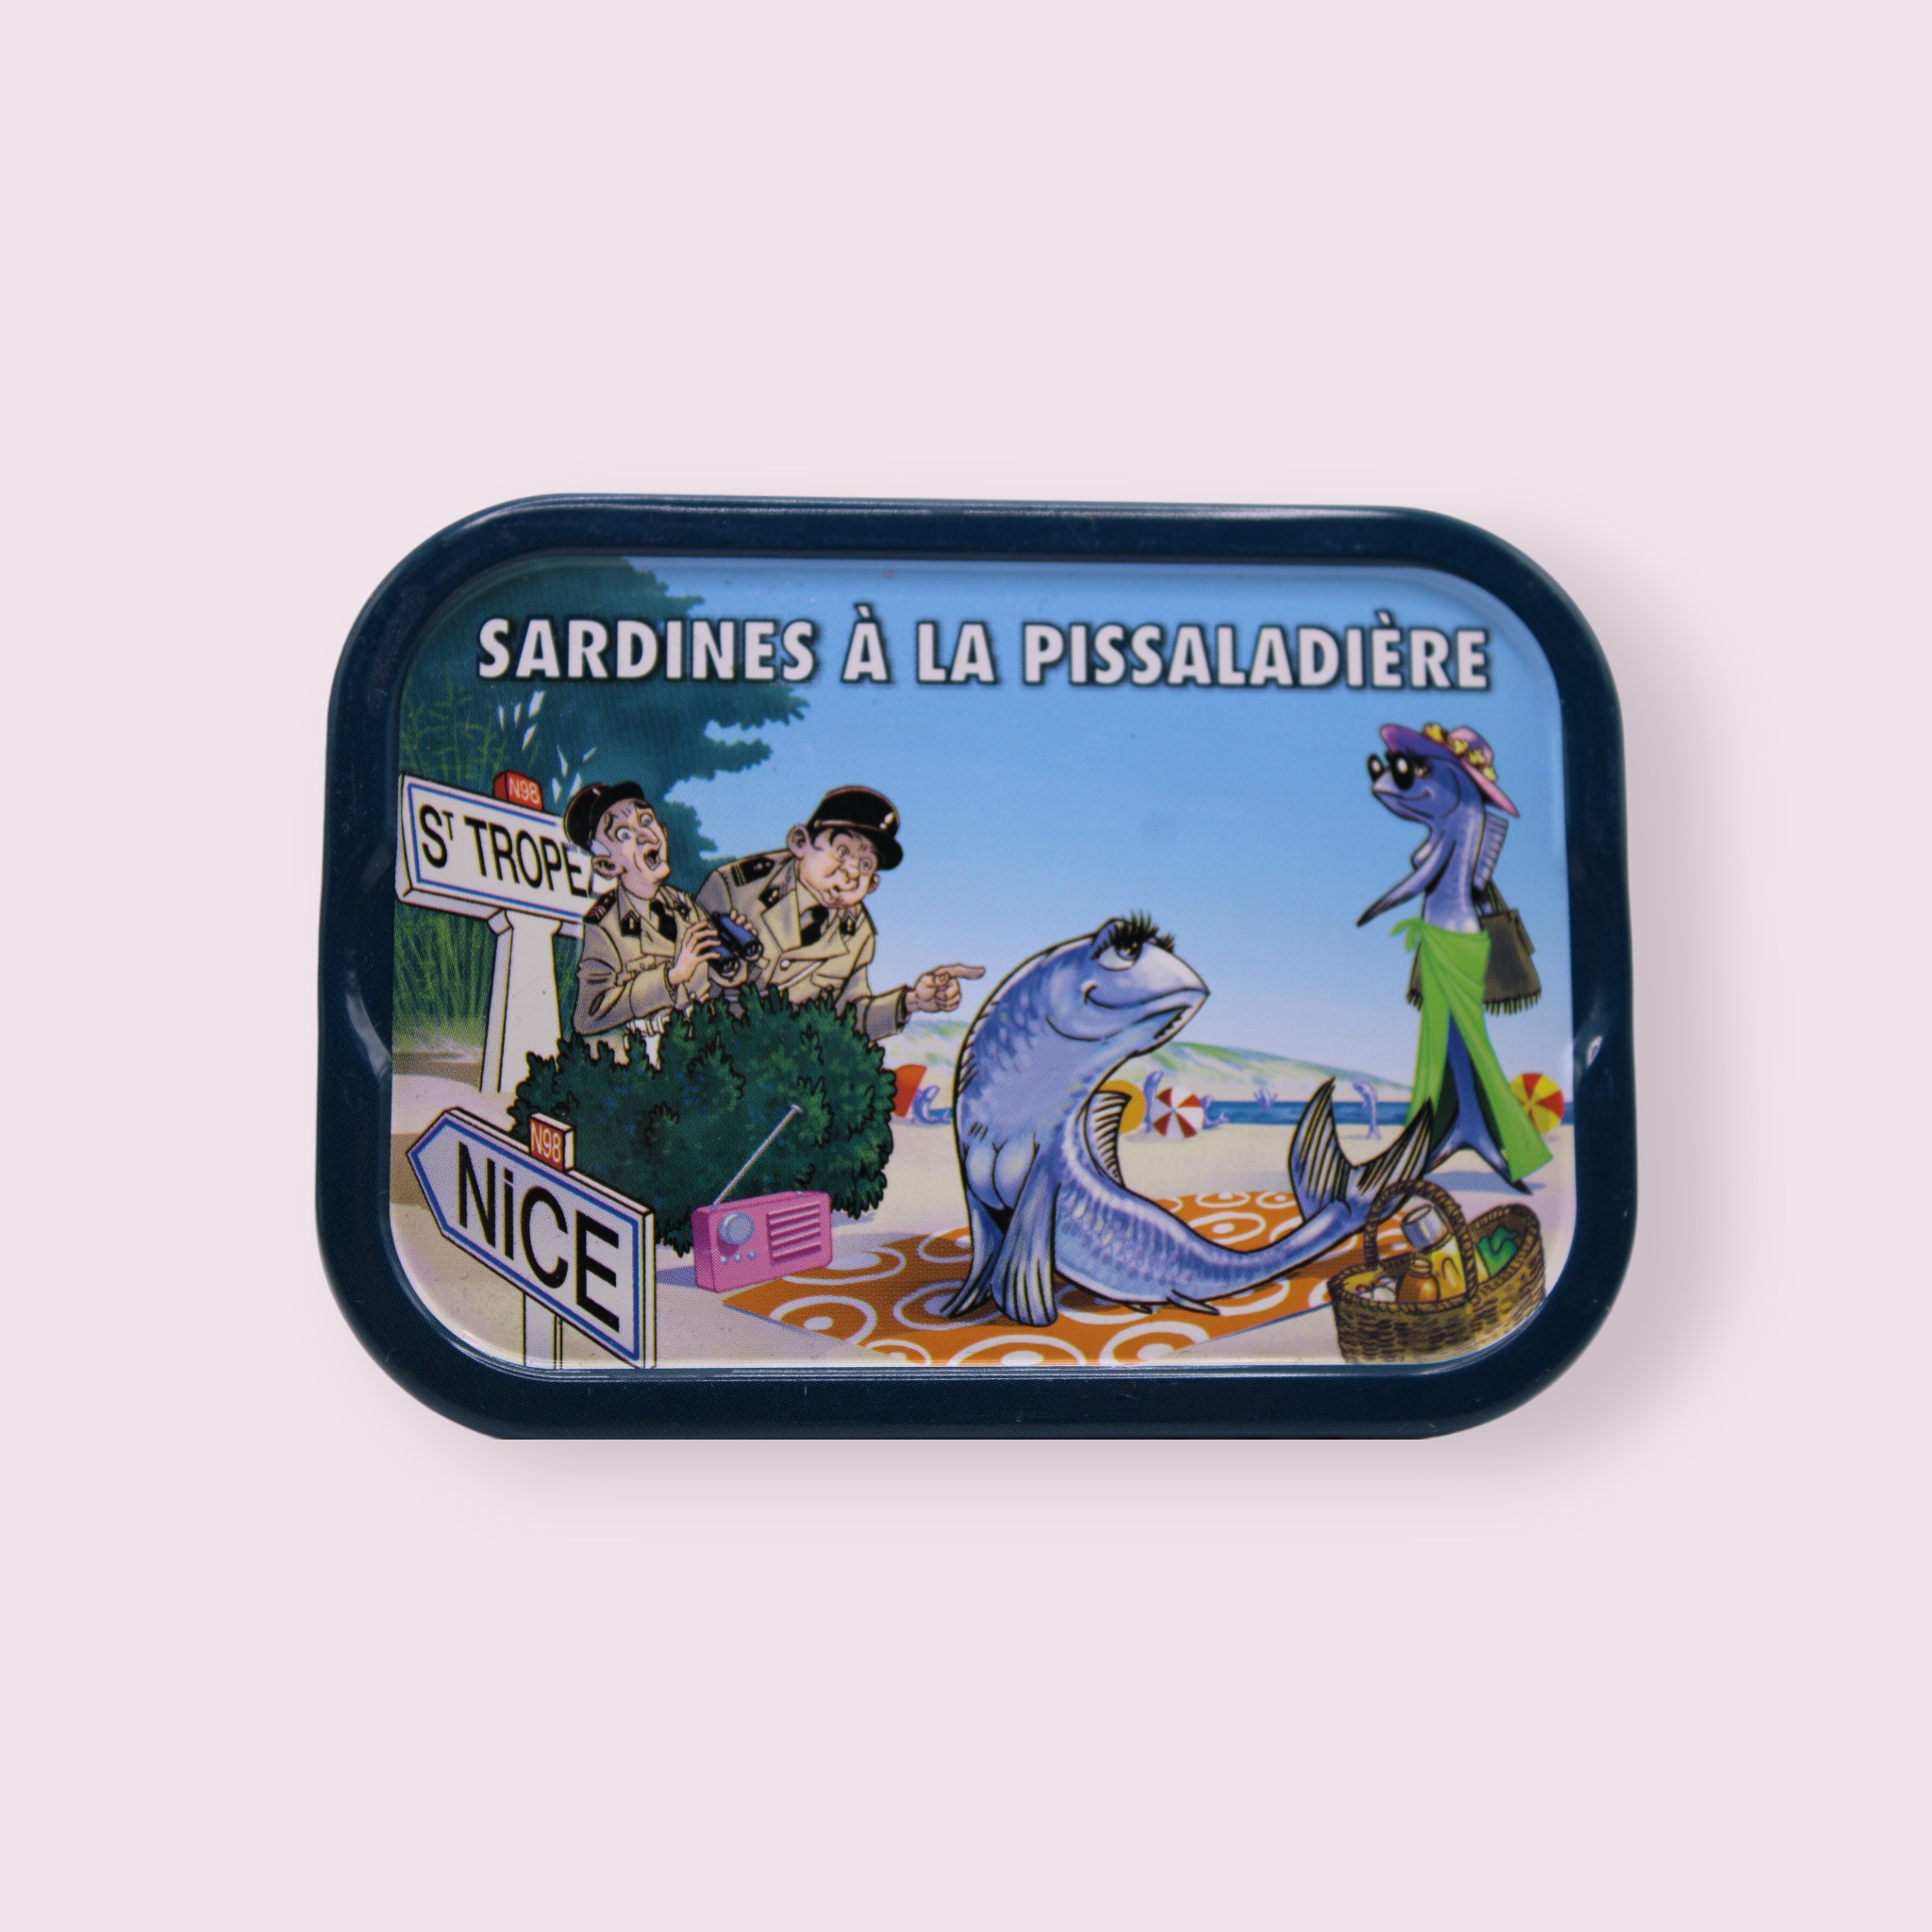 Sardines à la pissaladière - Ferrigno